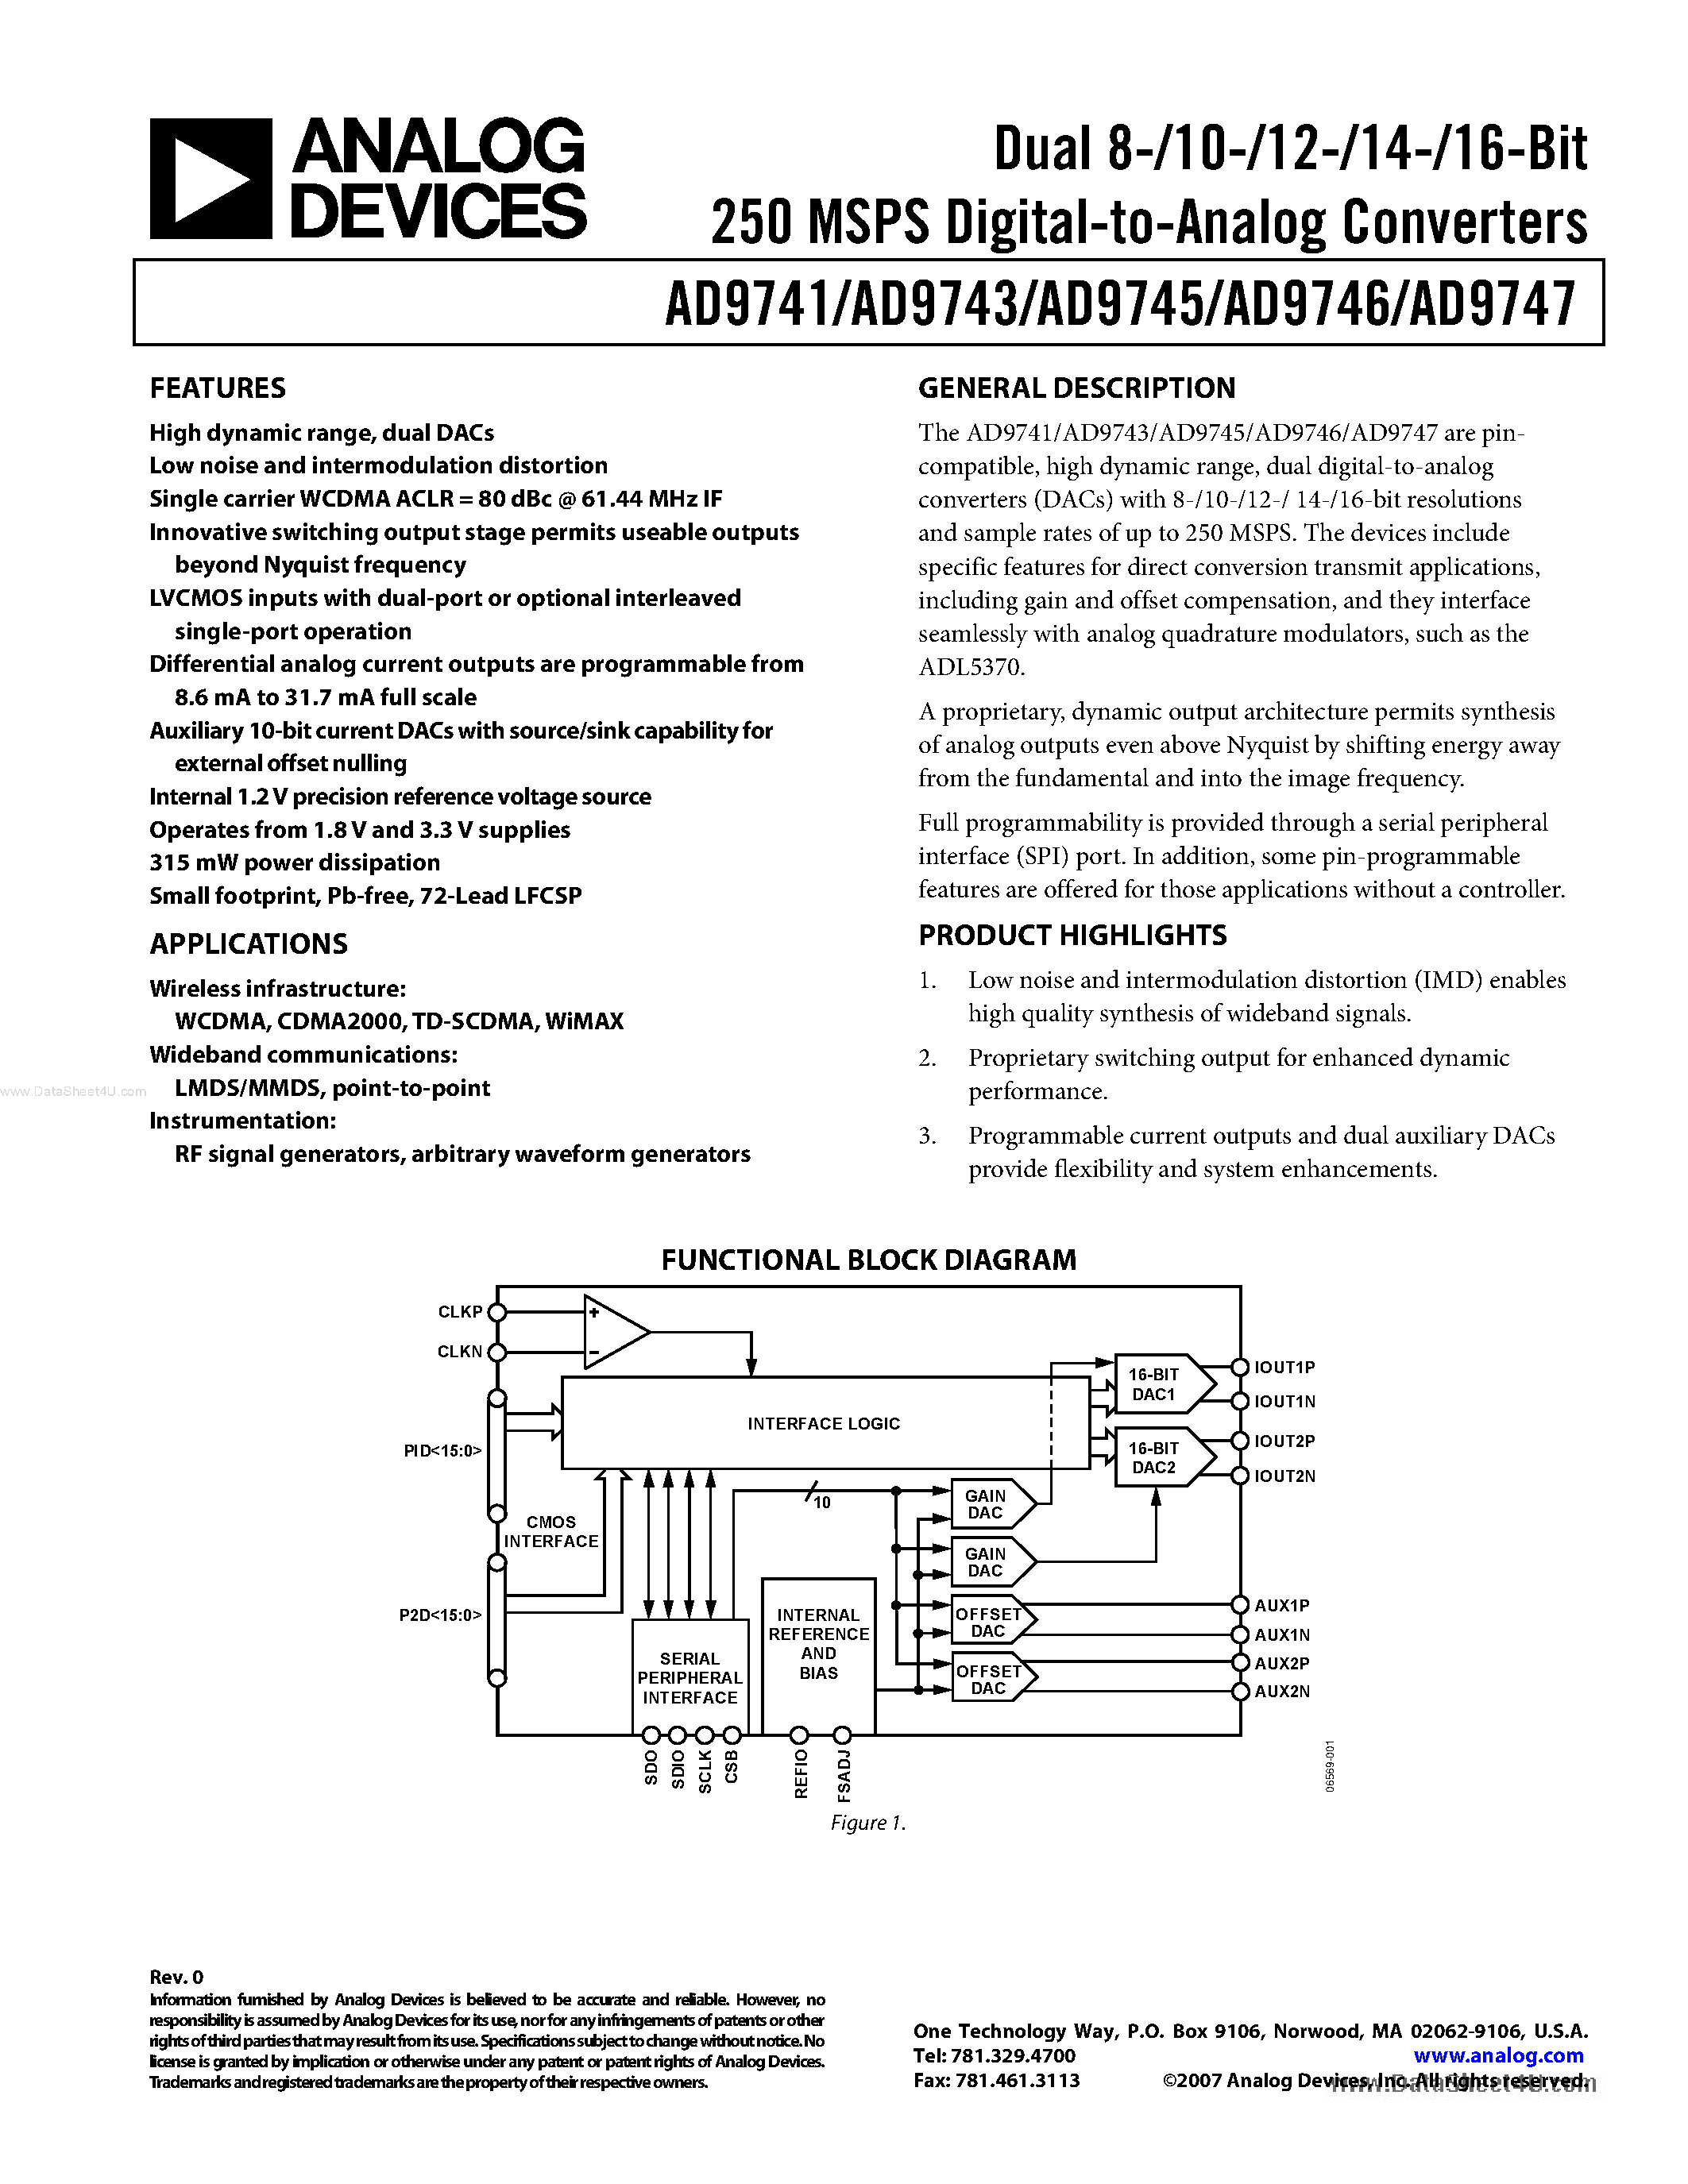 Даташит AD9741 - (AD9741 - AD9747) Dual 16-Bit 250 MSPS Digital-to-Analog Converters страница 1